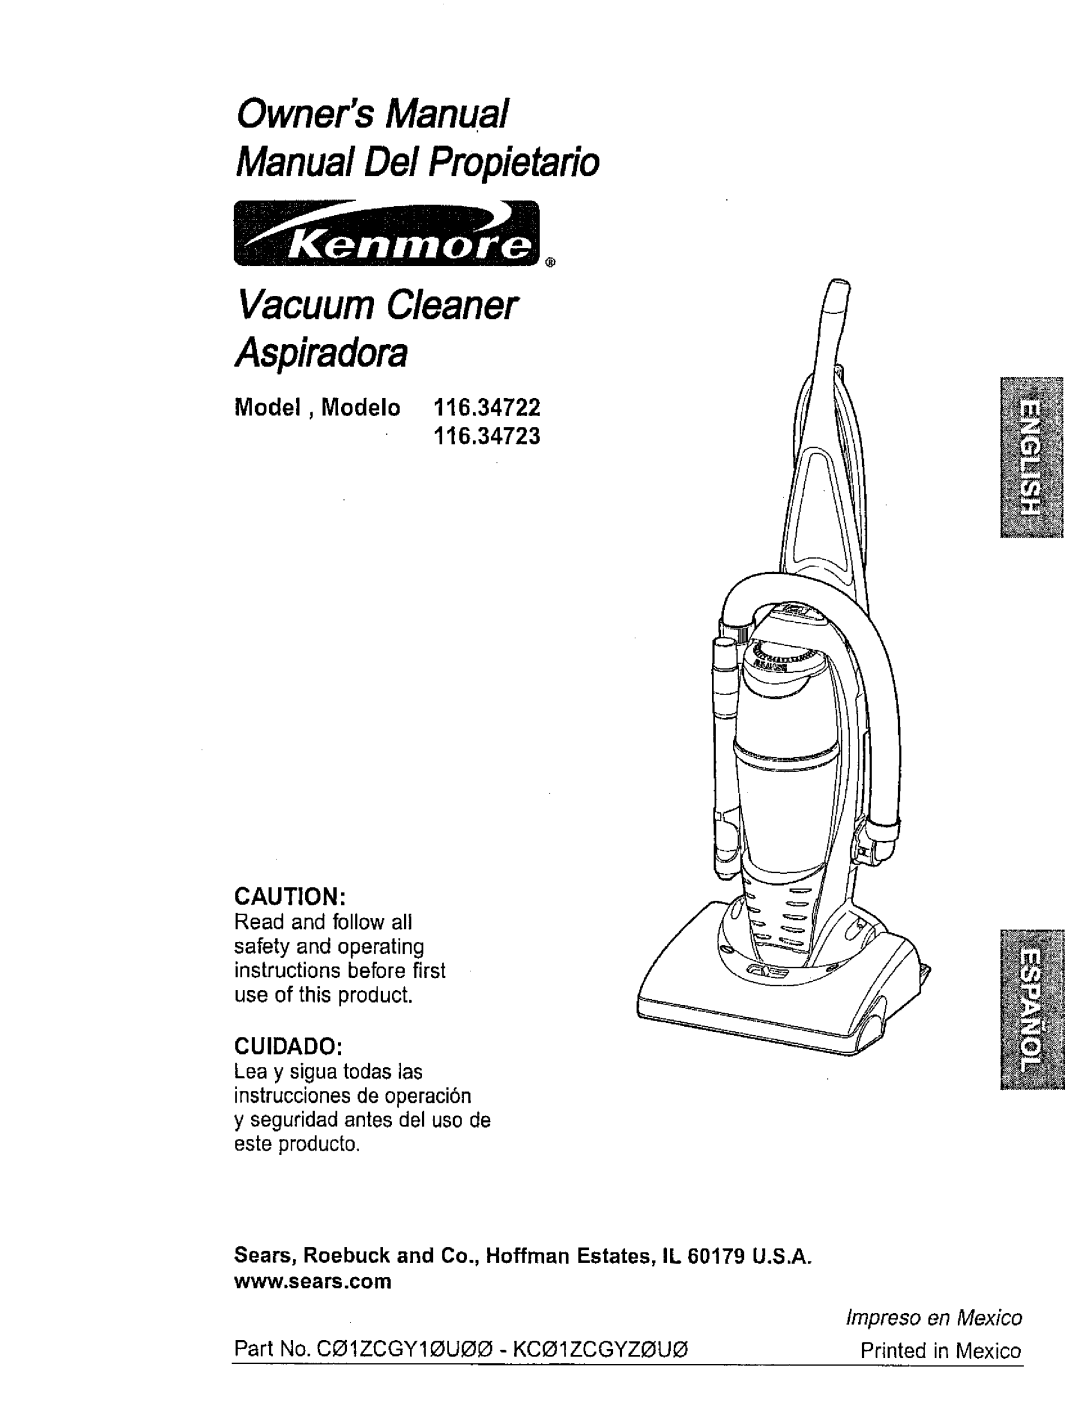 Kenmore 116.34723, 116.34722 owner manual Model, Modelo, Vacuum Cleaner Aspiradora, Impreso en Mexico 